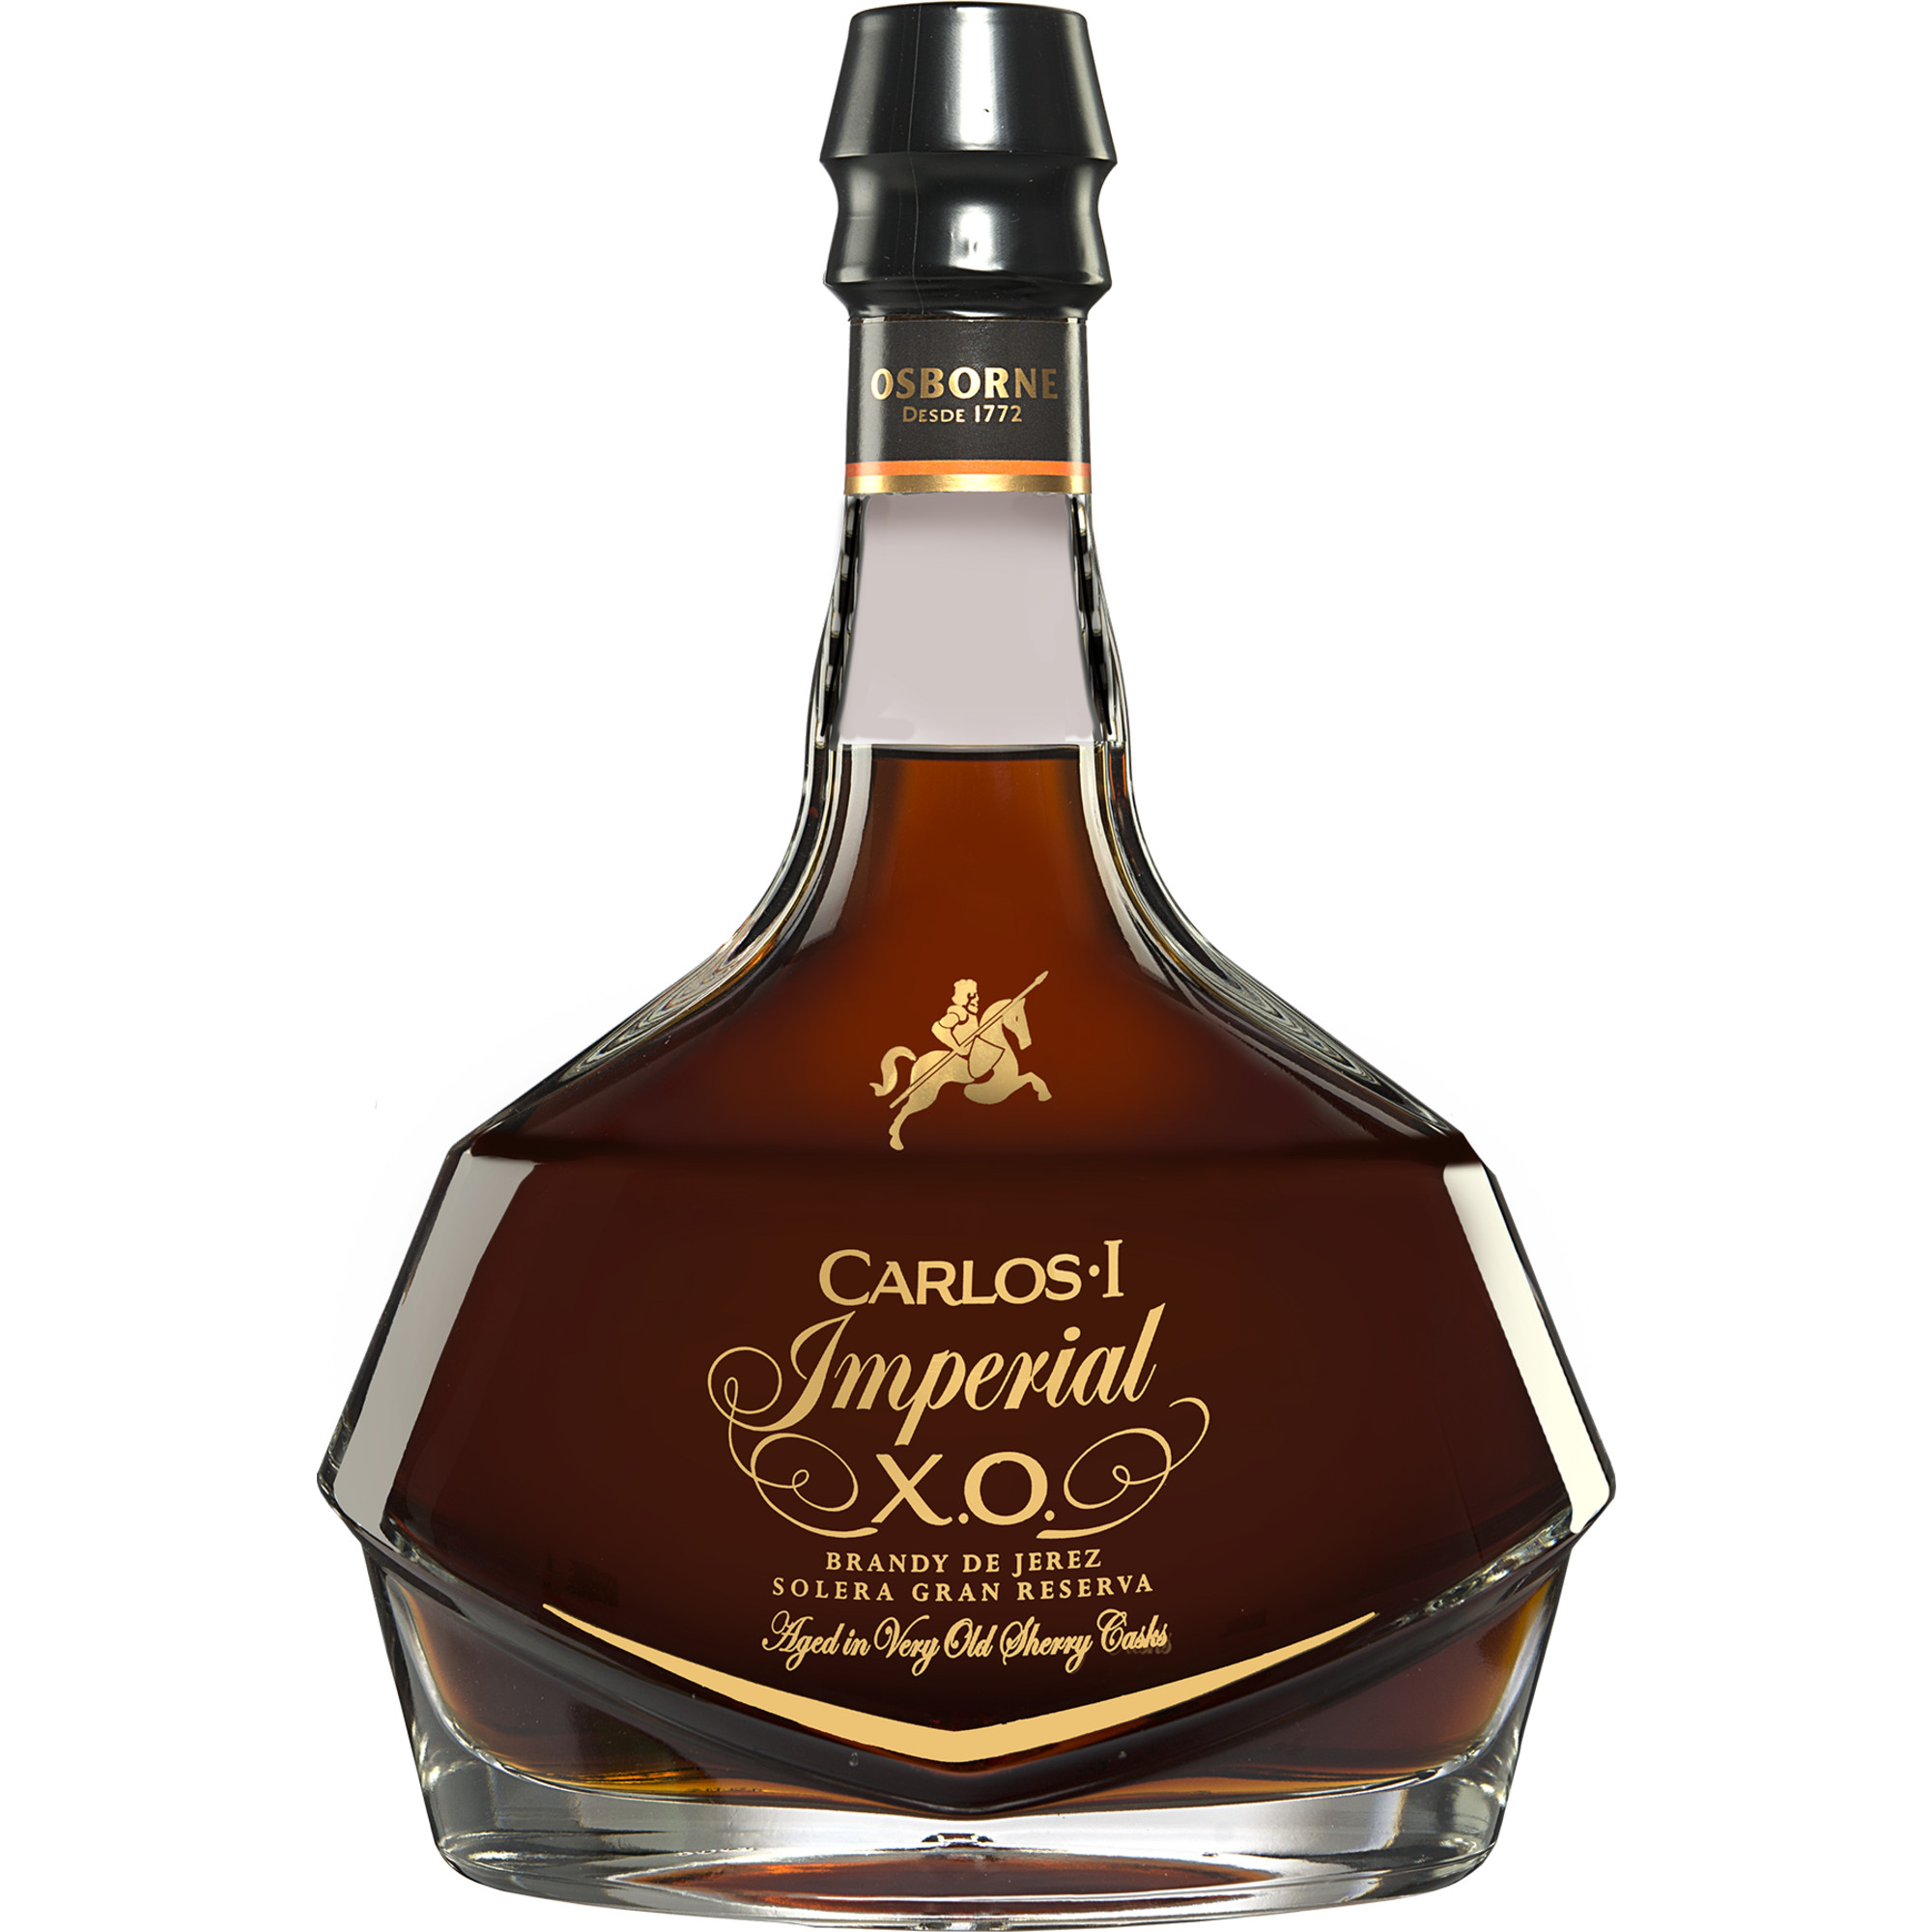 Image of Brandy »Carlos I Imperial X.O.« Solera Gran Reserva - 0,7 L. 0.7L 40% Vol. Brandy aus Spanien